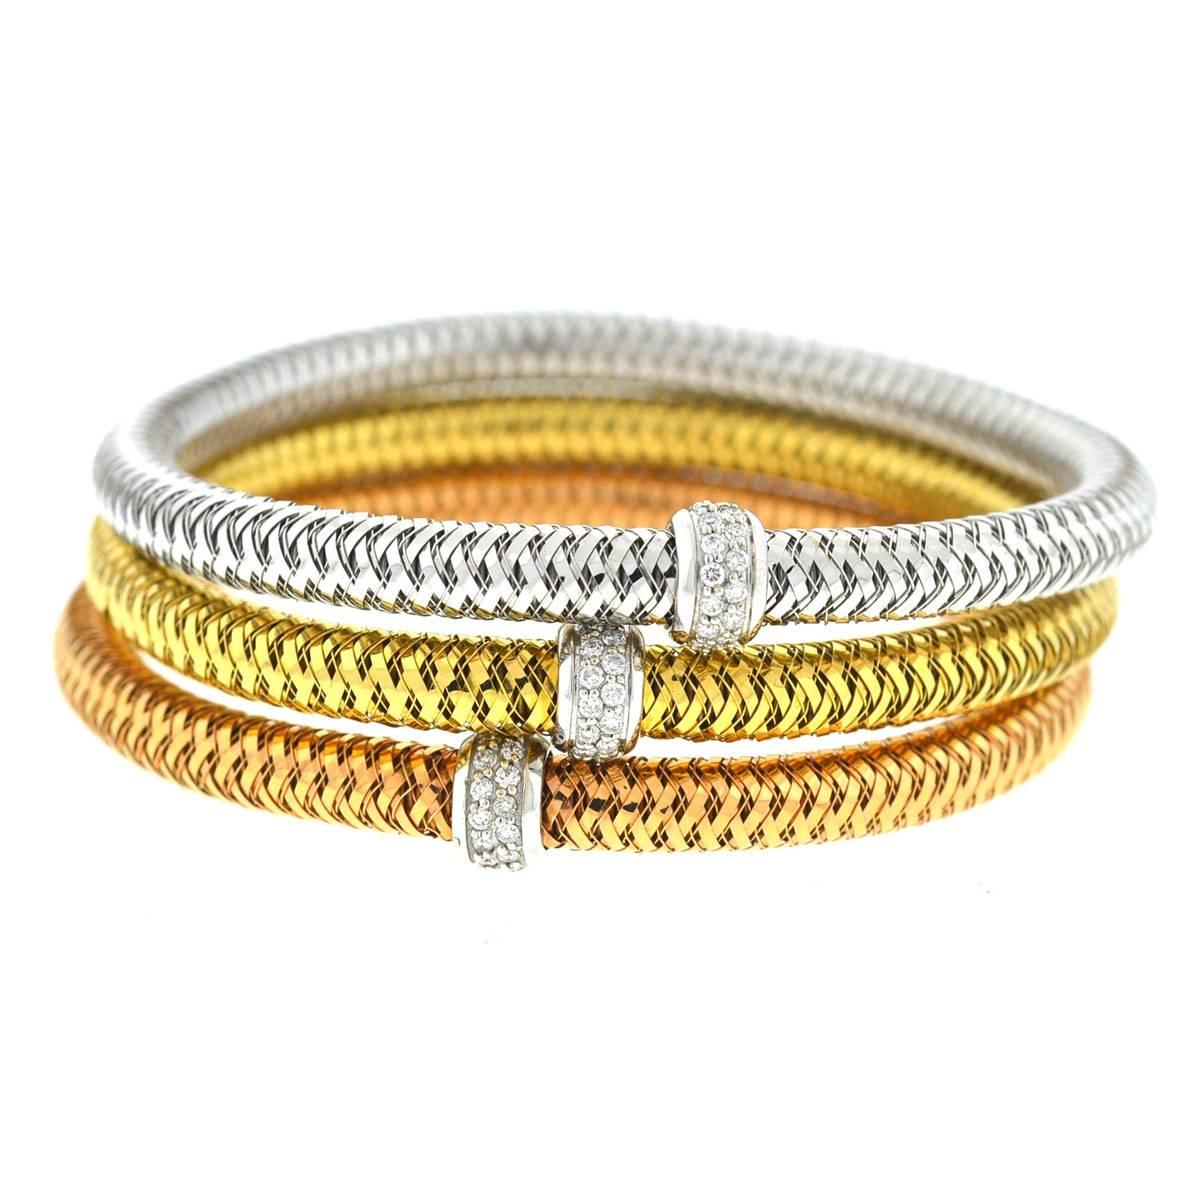 Company - Roberto Coin
Style - Primavera Flexible Bangle Bracelets w/ Diamonds
Metal - 18k Gold
Stones - Diamonds - Approx. .22 ctw each bracelet
Weight - 13.3 grams each
Length - 7"
Includes - Bracelet Only
5628-1ree/5628-2ree/5628-3ree